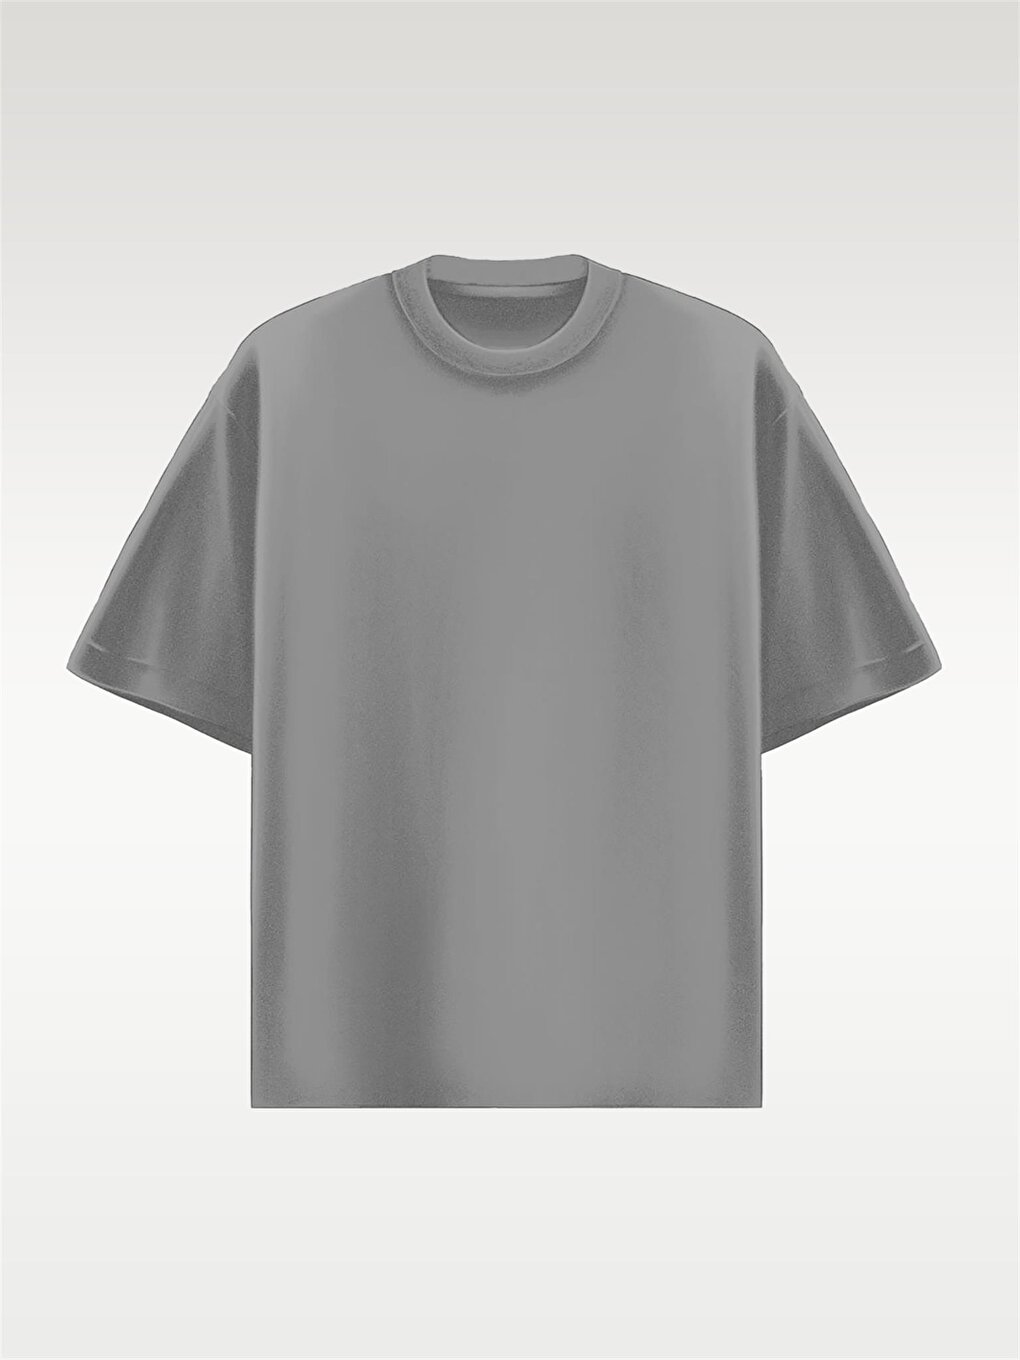 Базовая футболка Oversize Серая ablukaonline